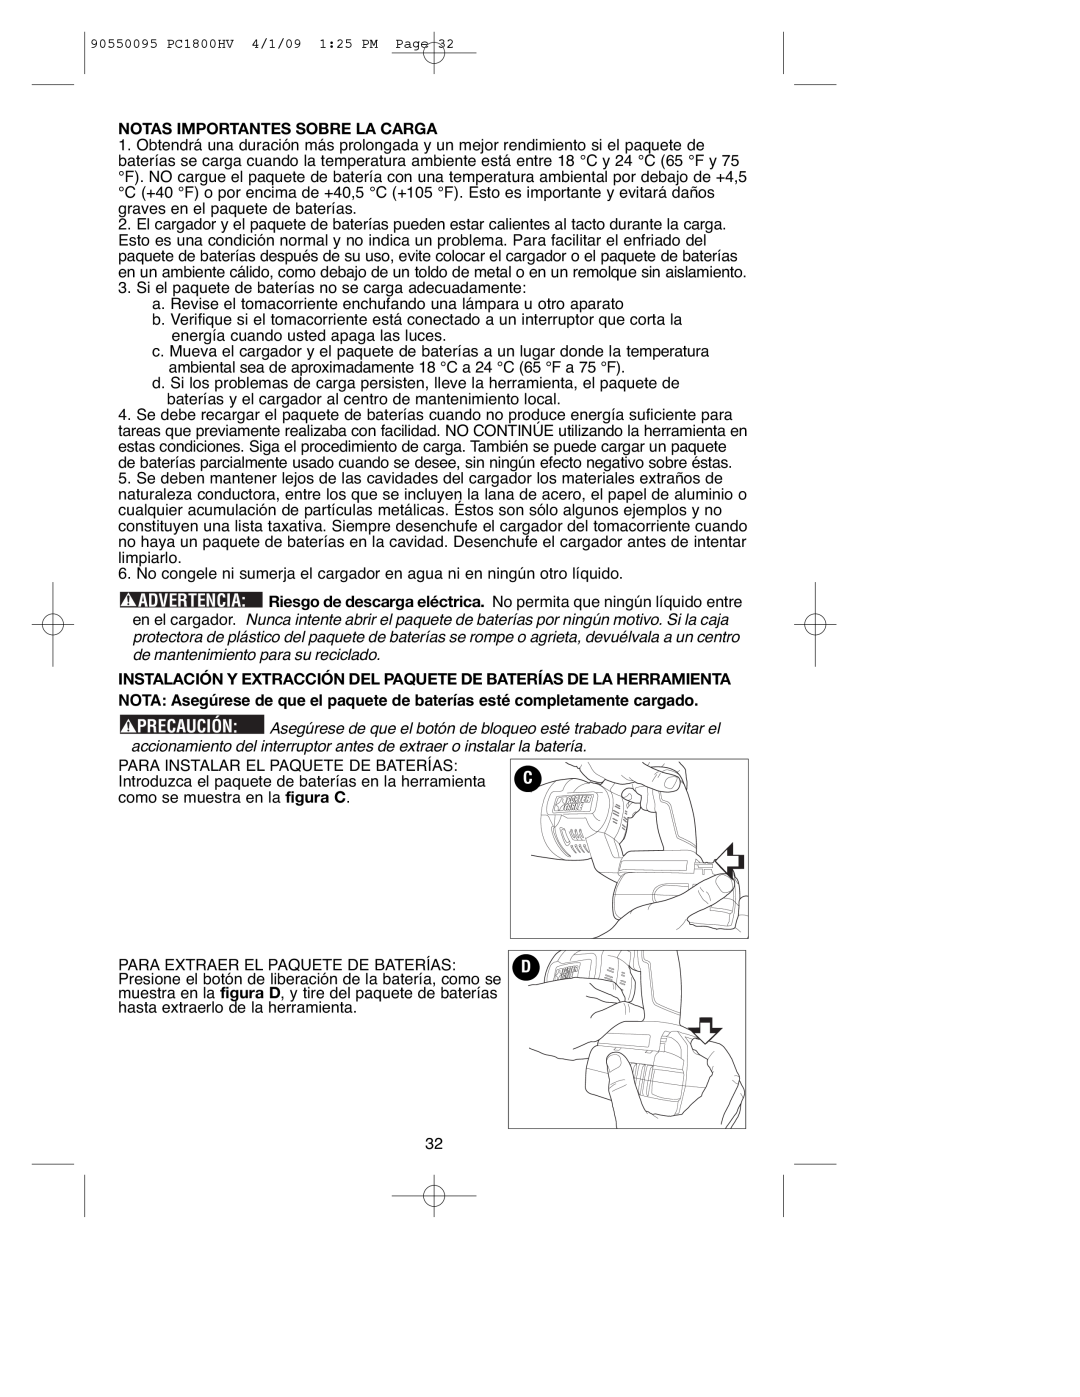 Porter-Cable 90550095, PC1800HV instruction manual Notas Importantes Sobre La Carga 